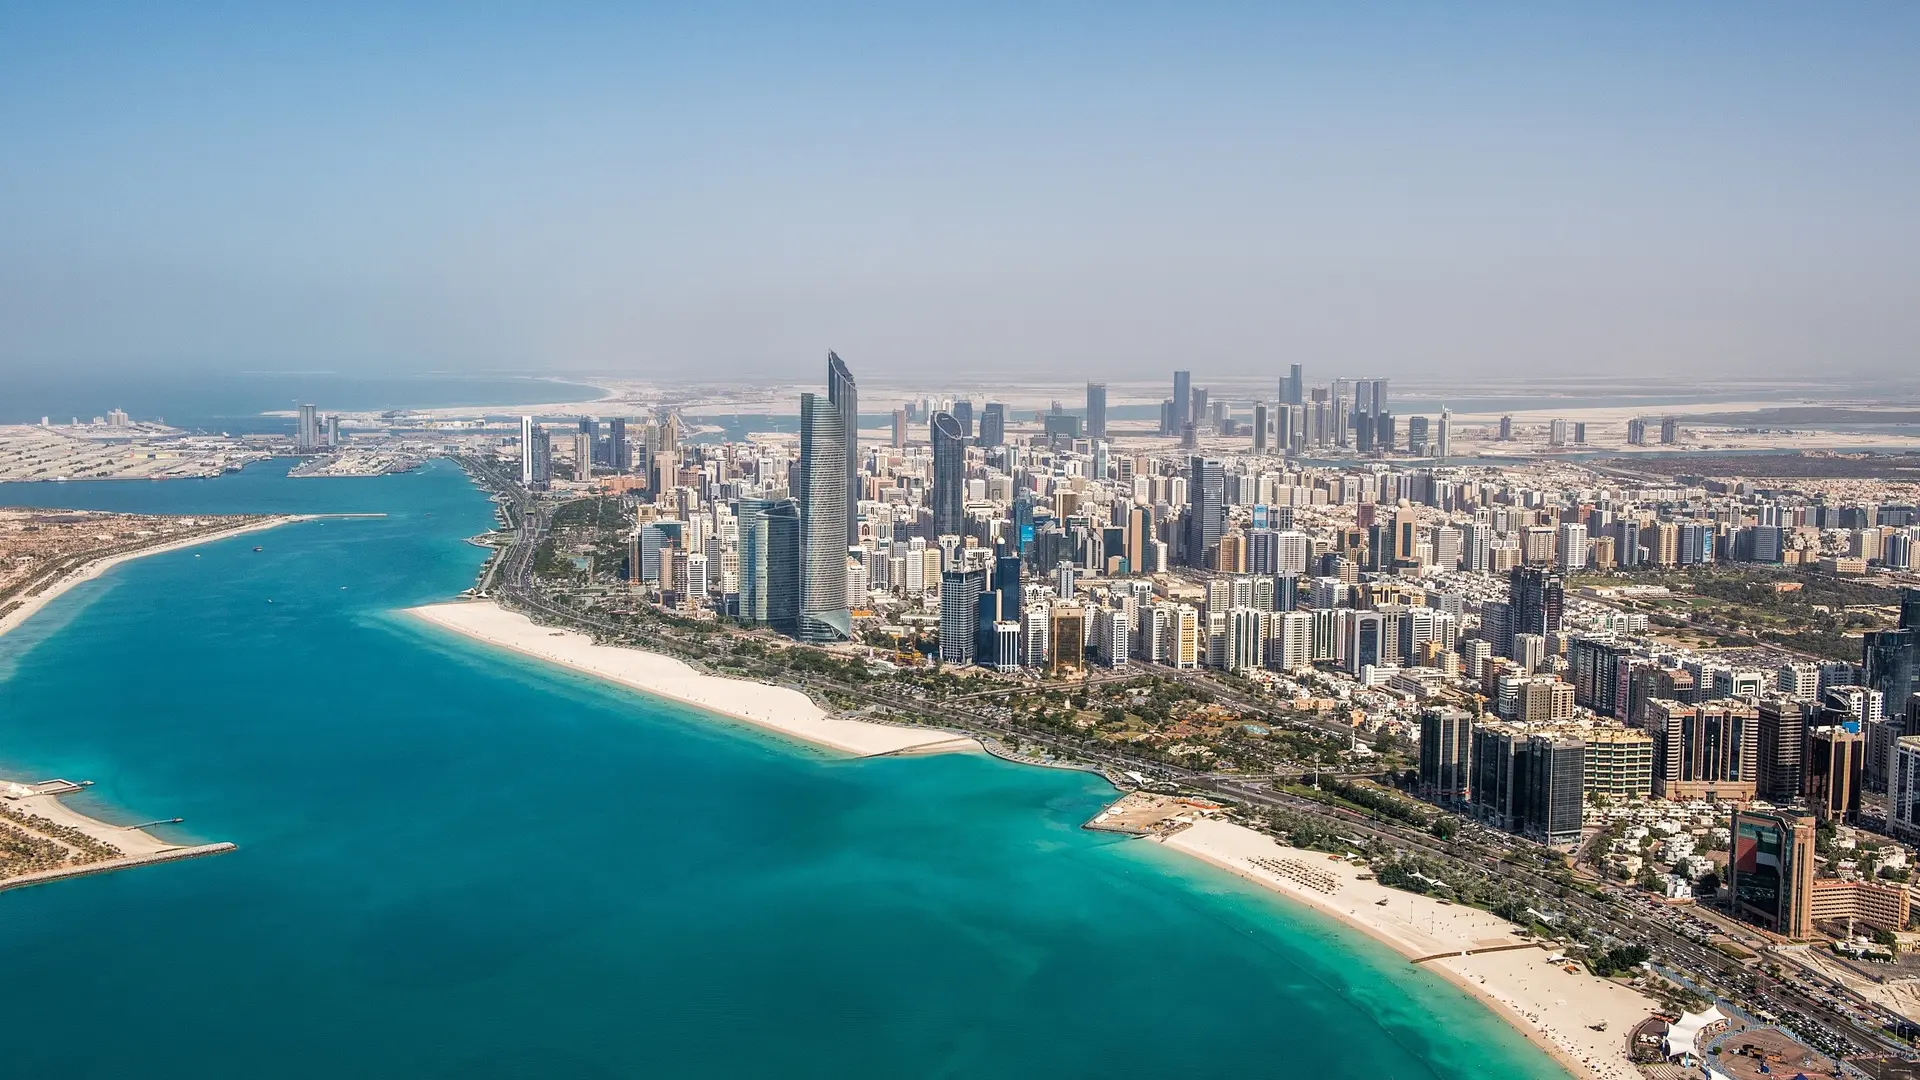 Destinations Articles - Abu Dhabi Travel Guide